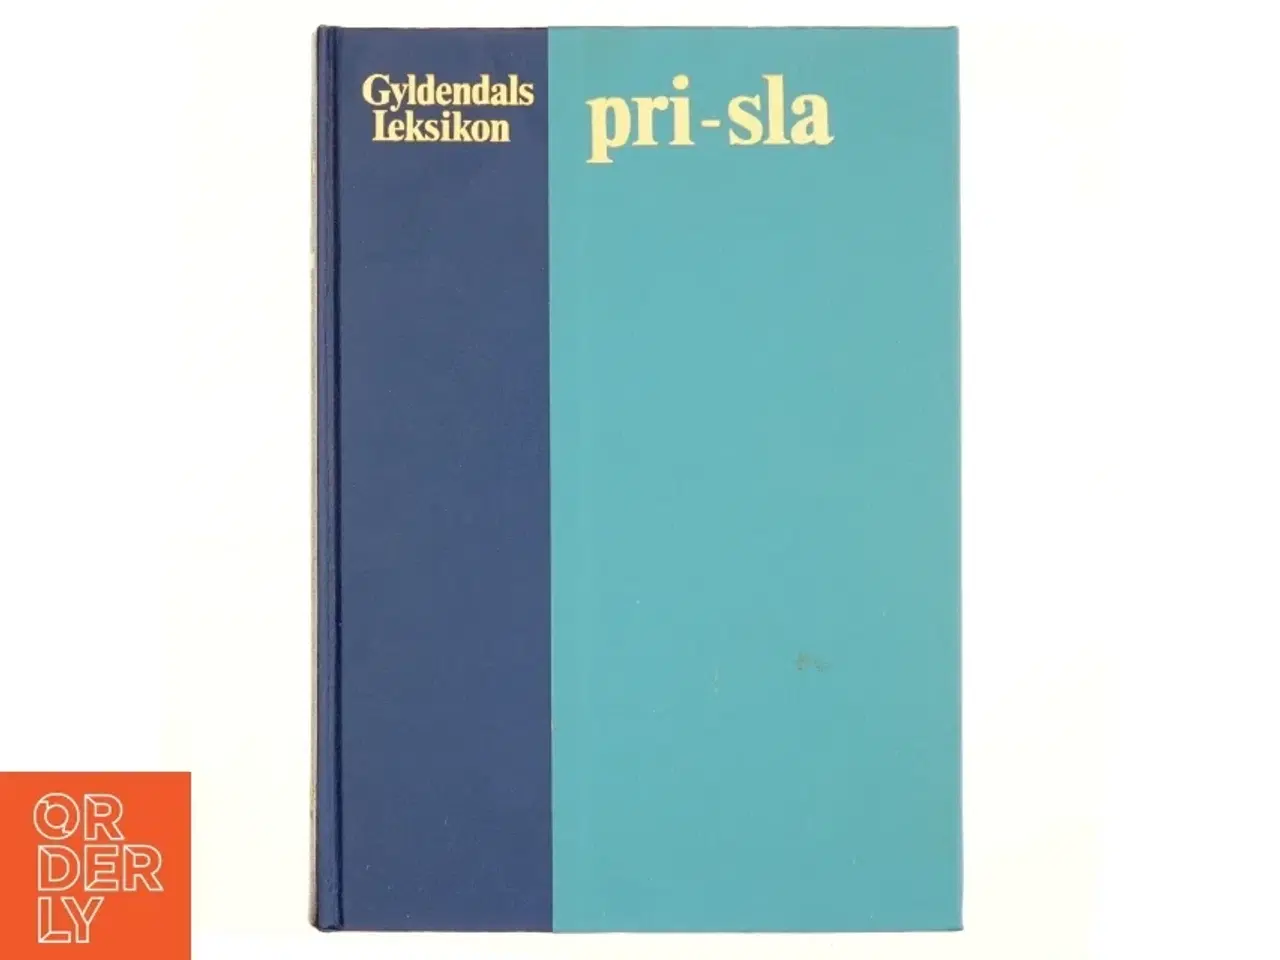 Billede 1 - Gyldendals leksikon, pri-sla